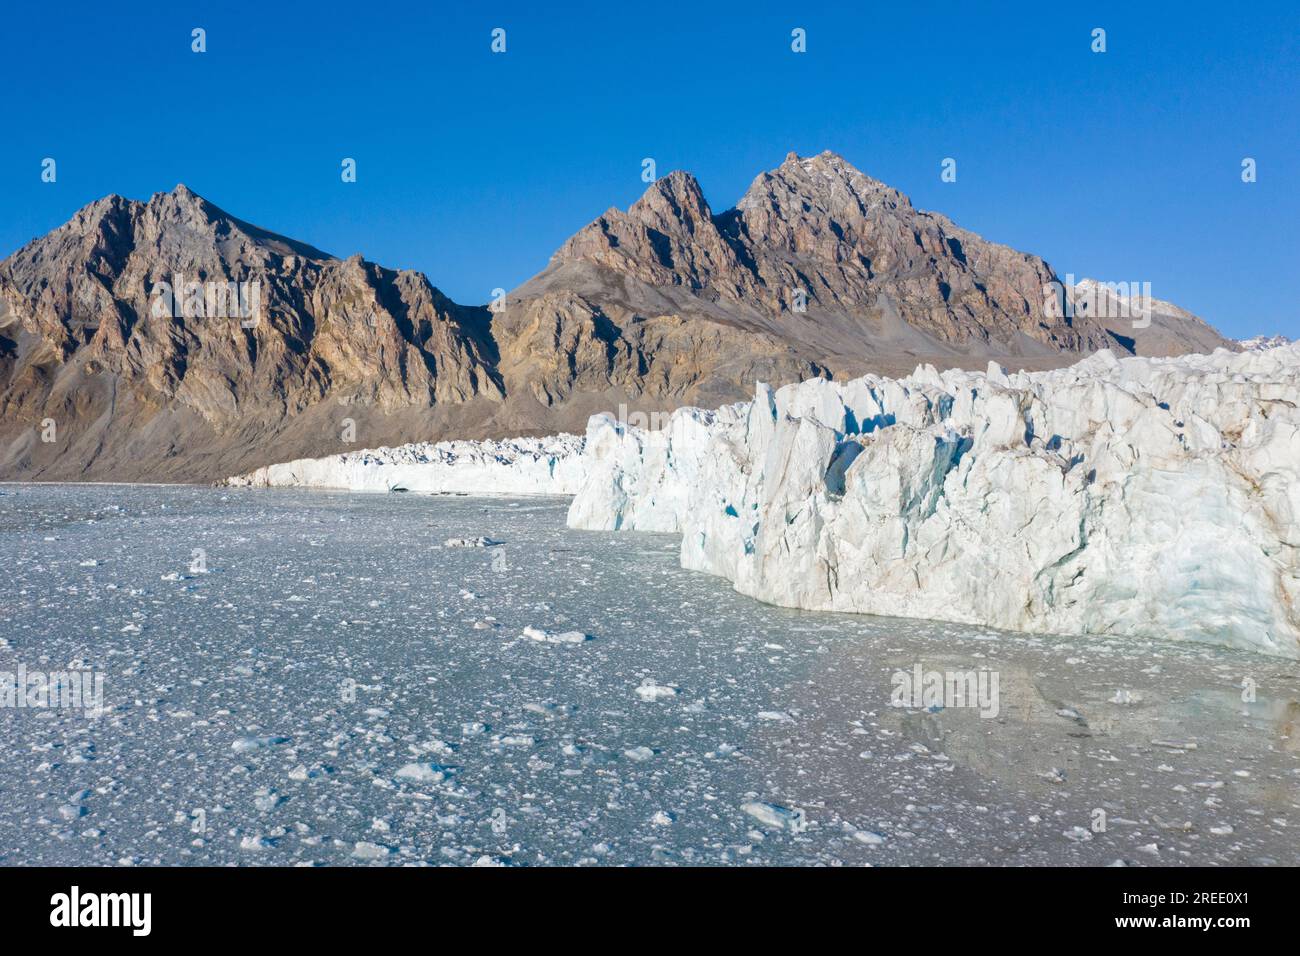 Fjortende Julibreen / 14th of July Glacier calving into Krossfjorden in summer, Haakon VII Land, Spitsbergen / Svalbard, Norway Stock Photo